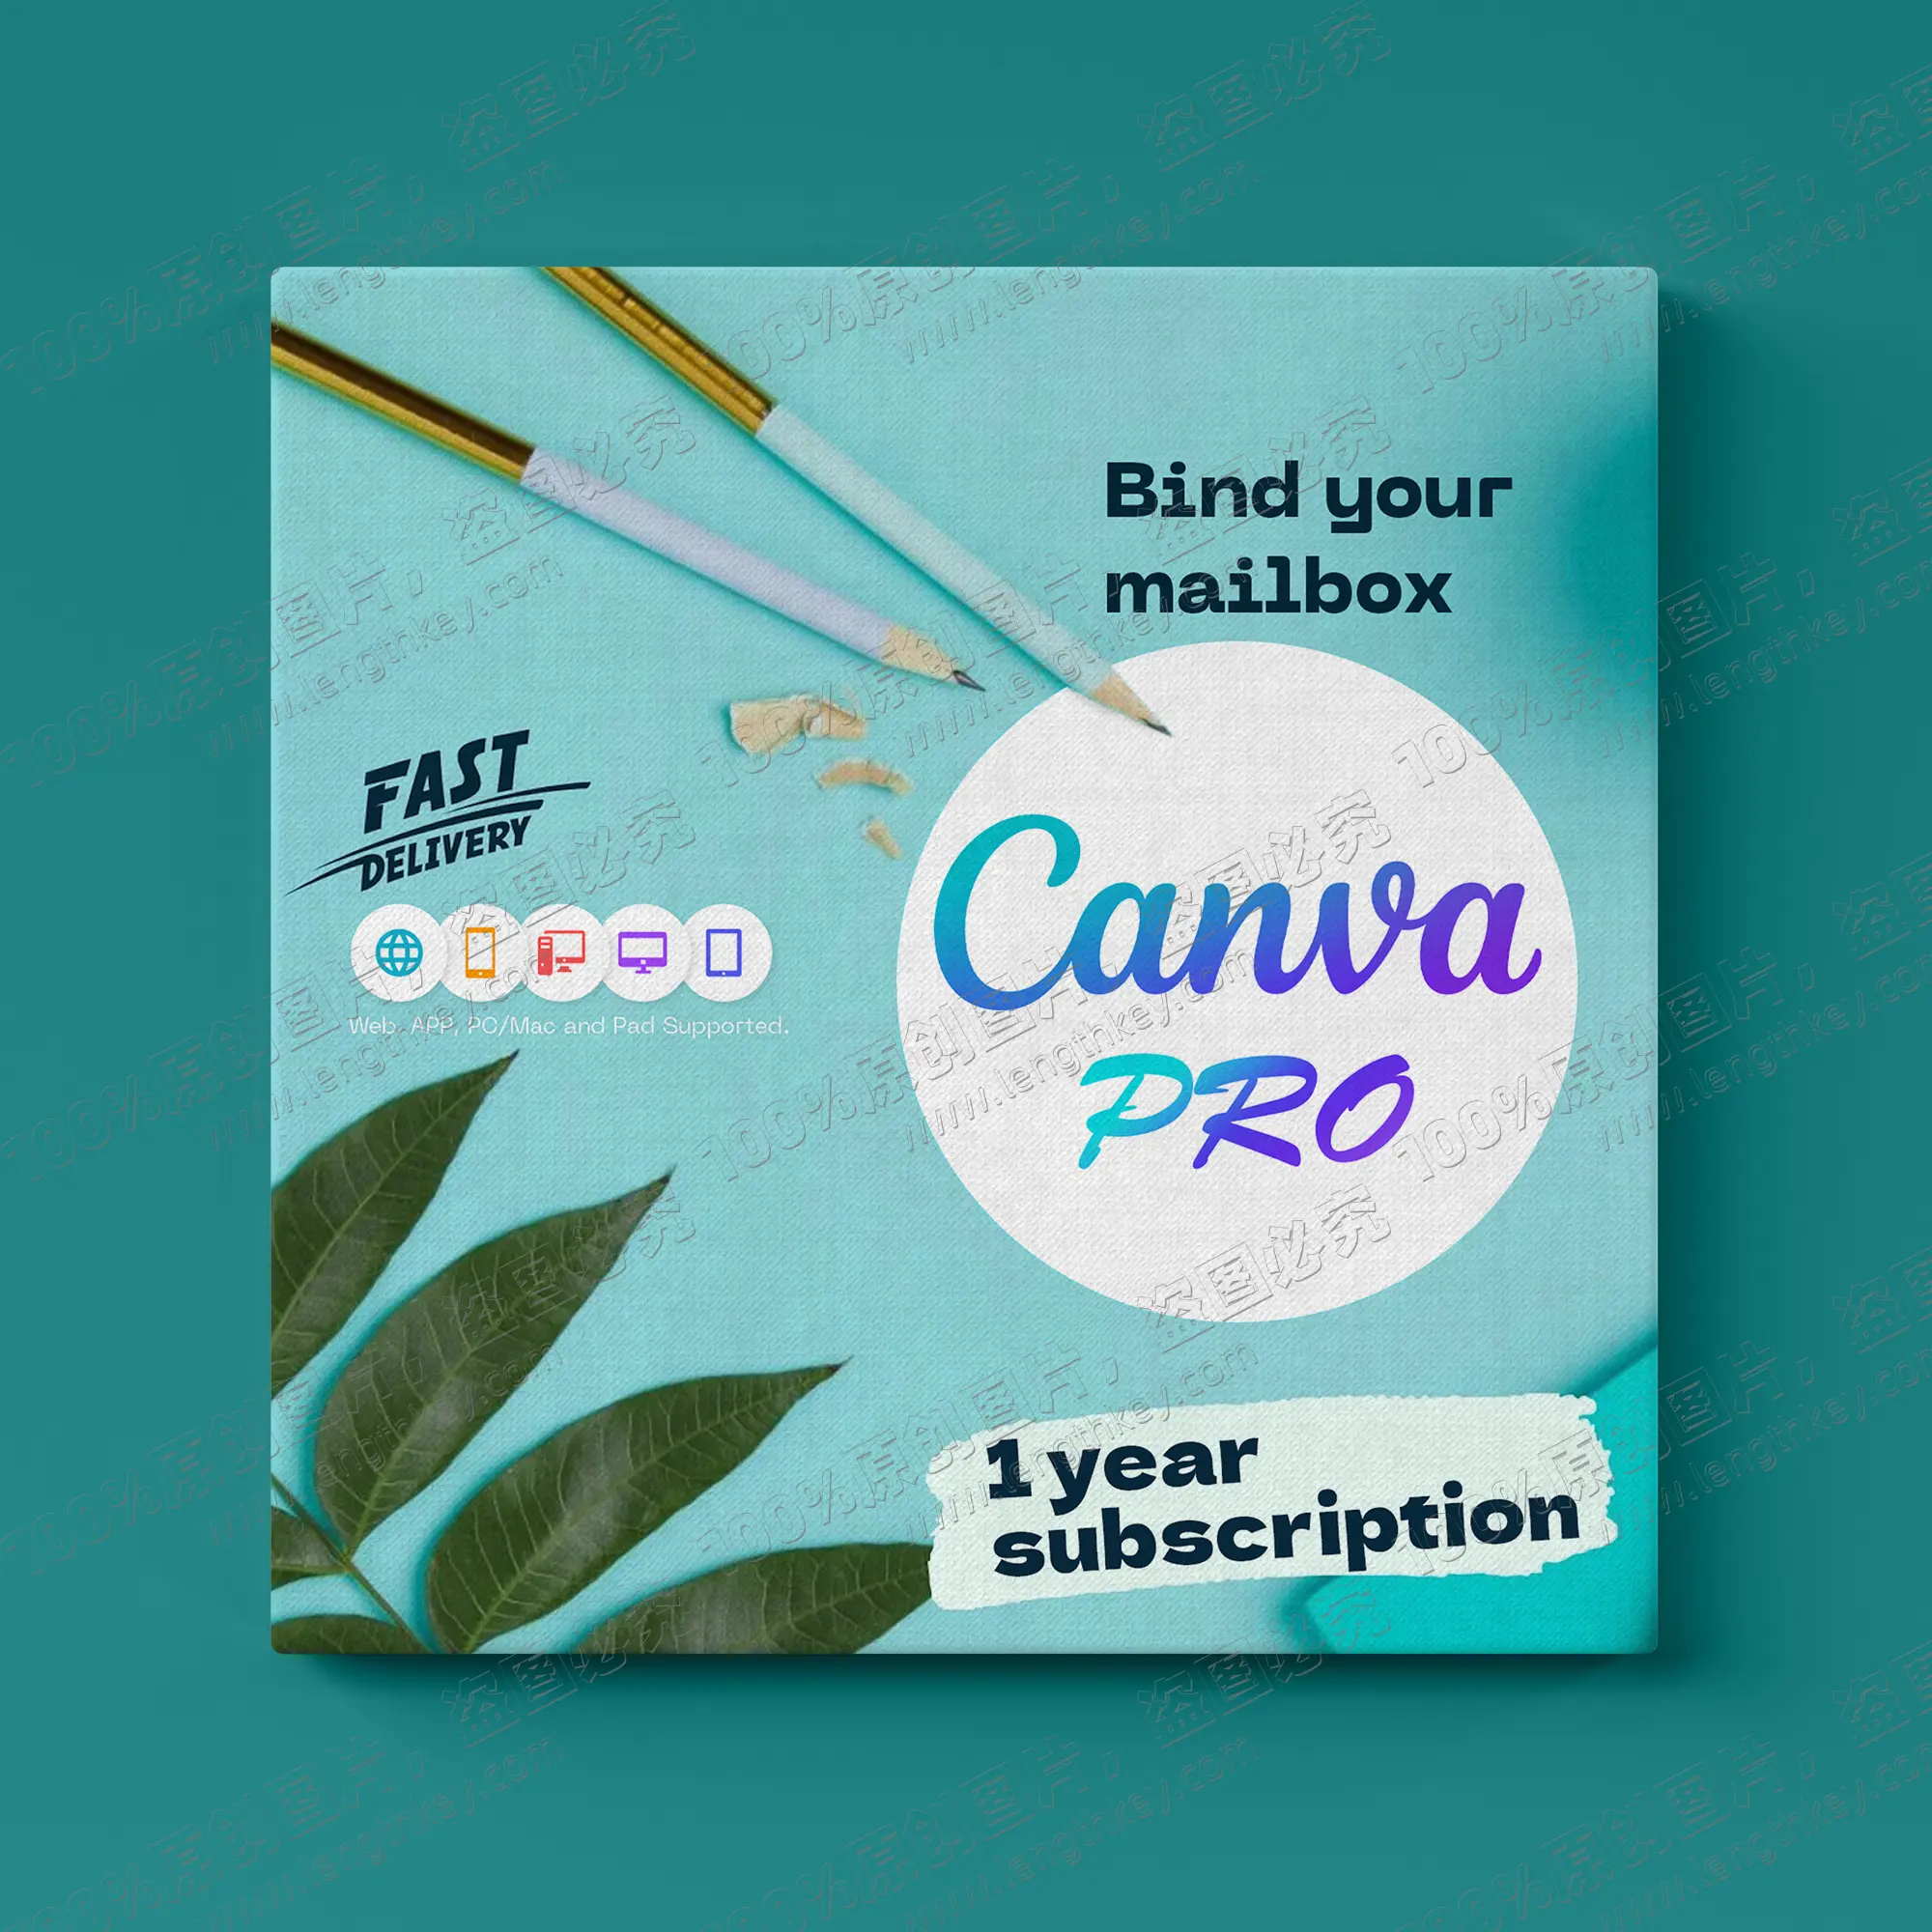 CanvaProプライベートアカウント1年間の公式本物のオリジナルメール配信オンライングラフィックデザインソフトウェア